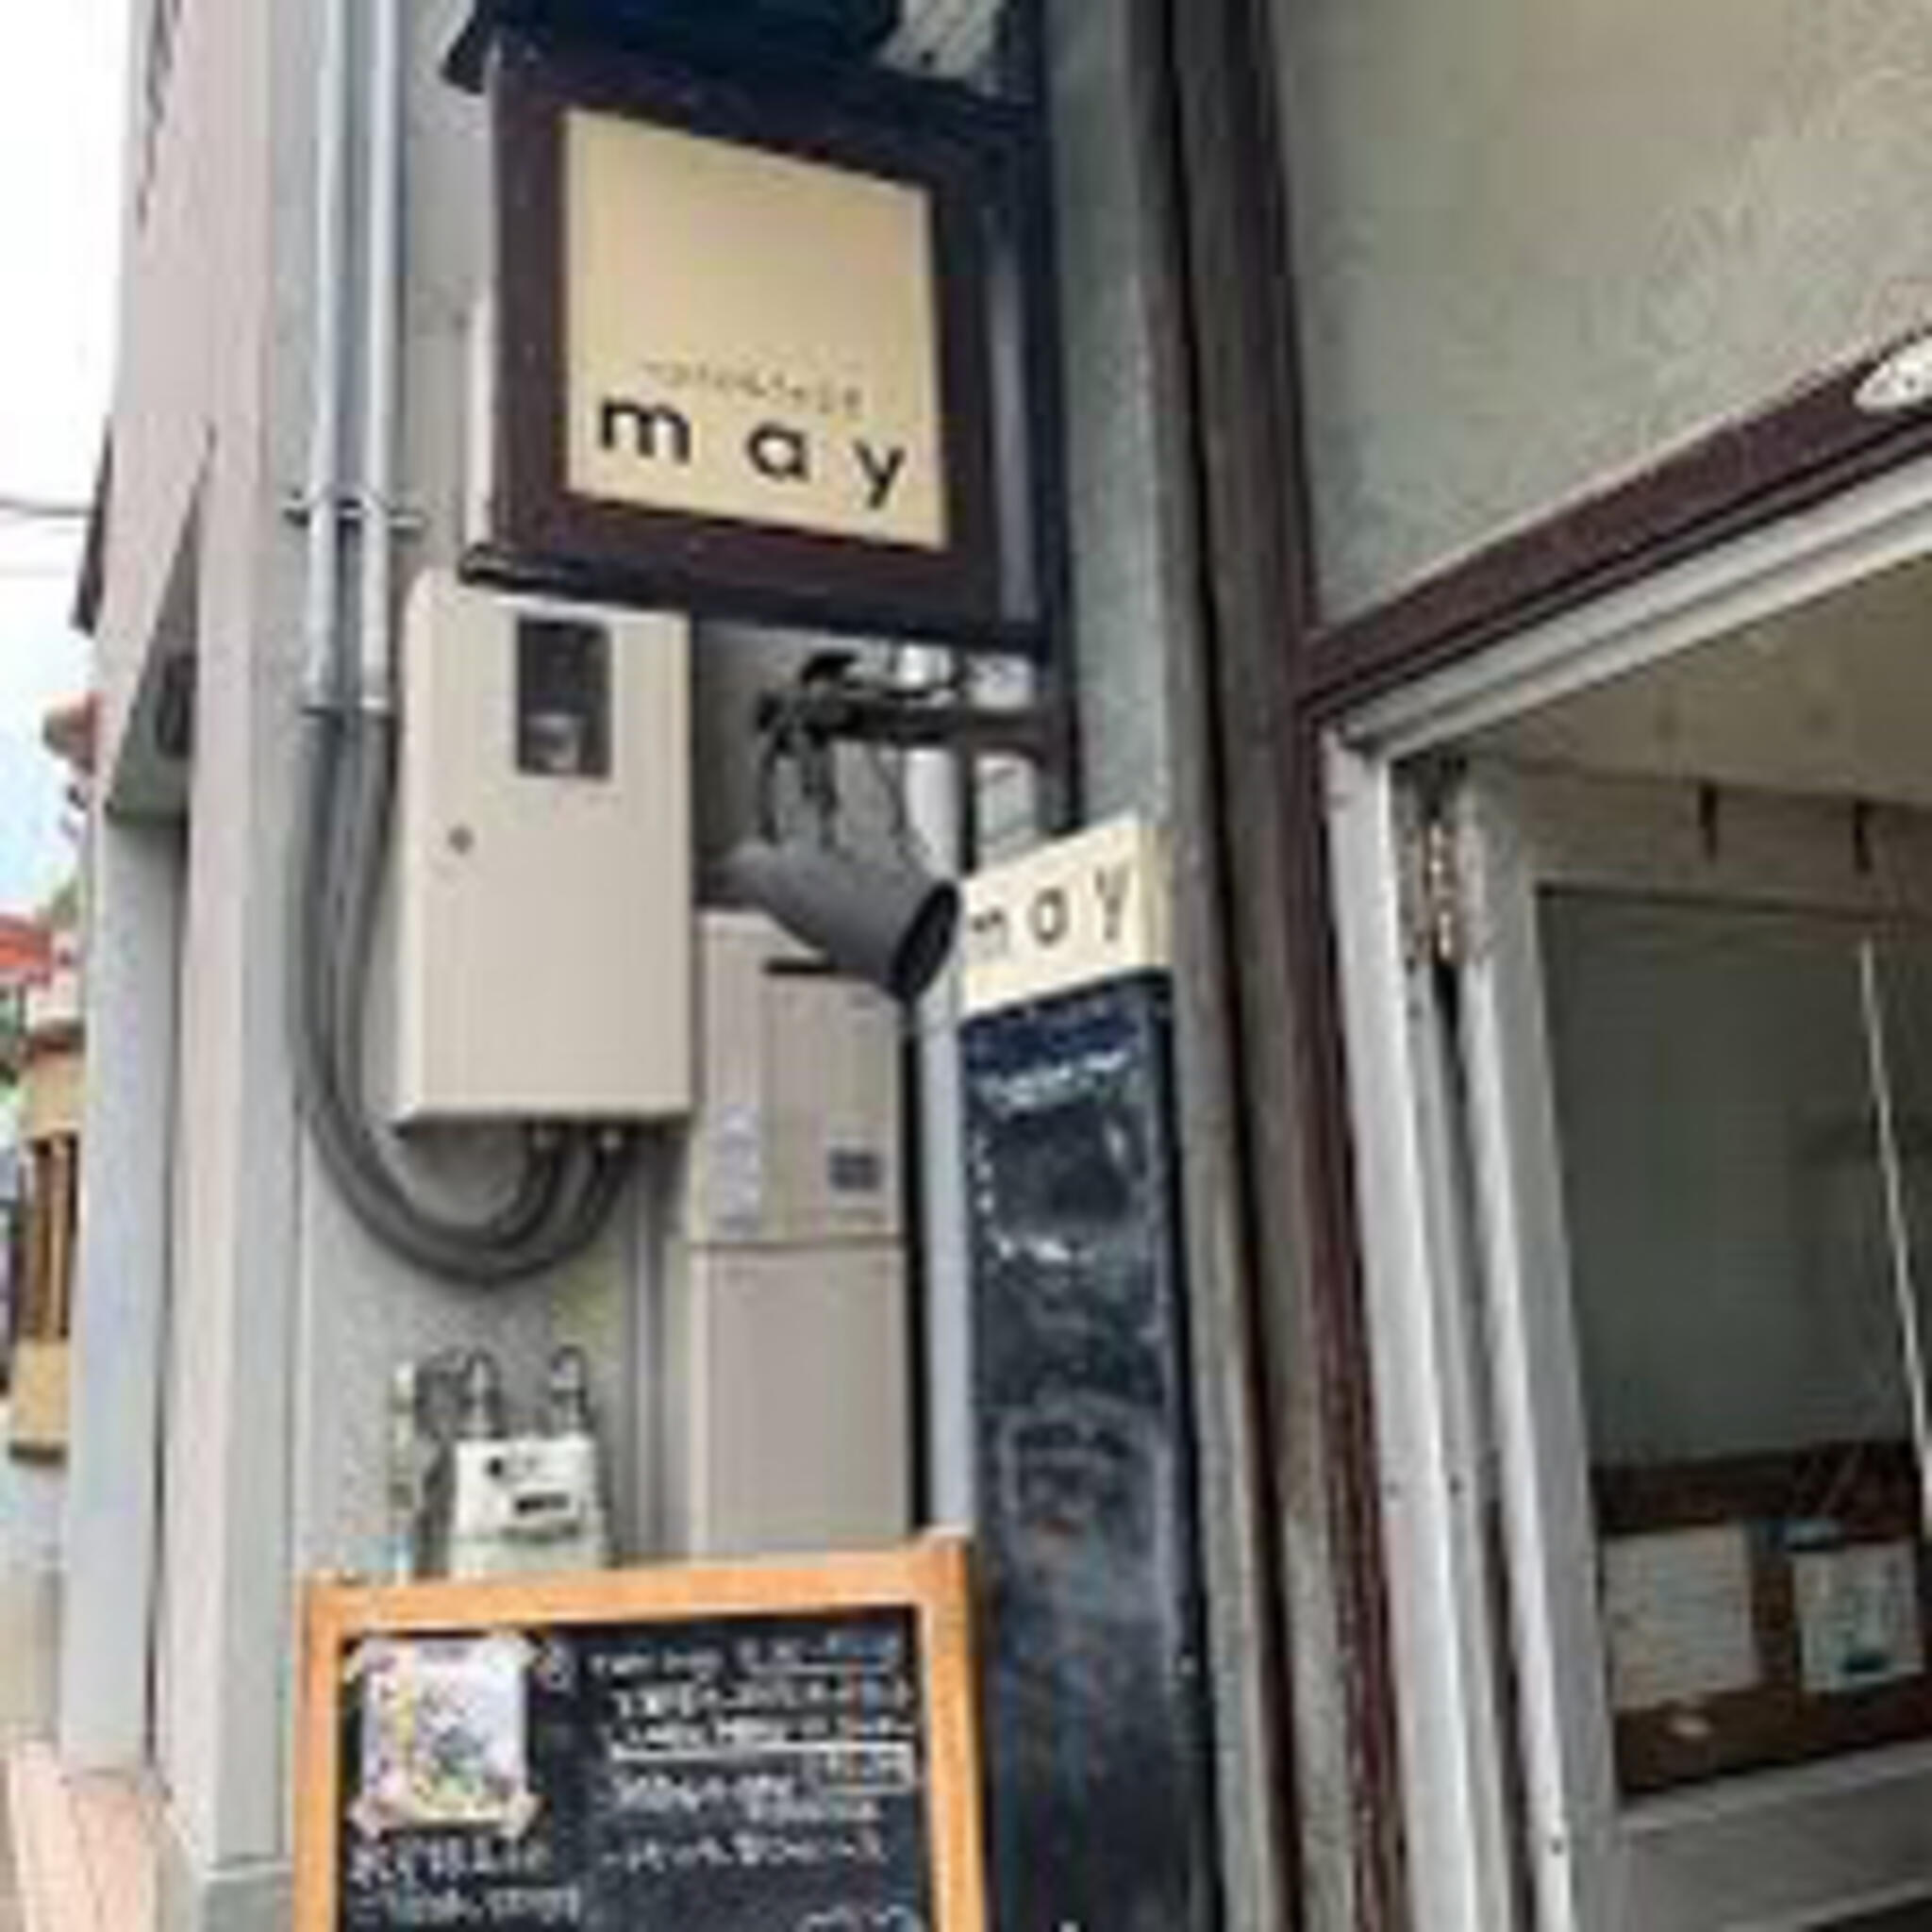 cafe mayの代表写真2